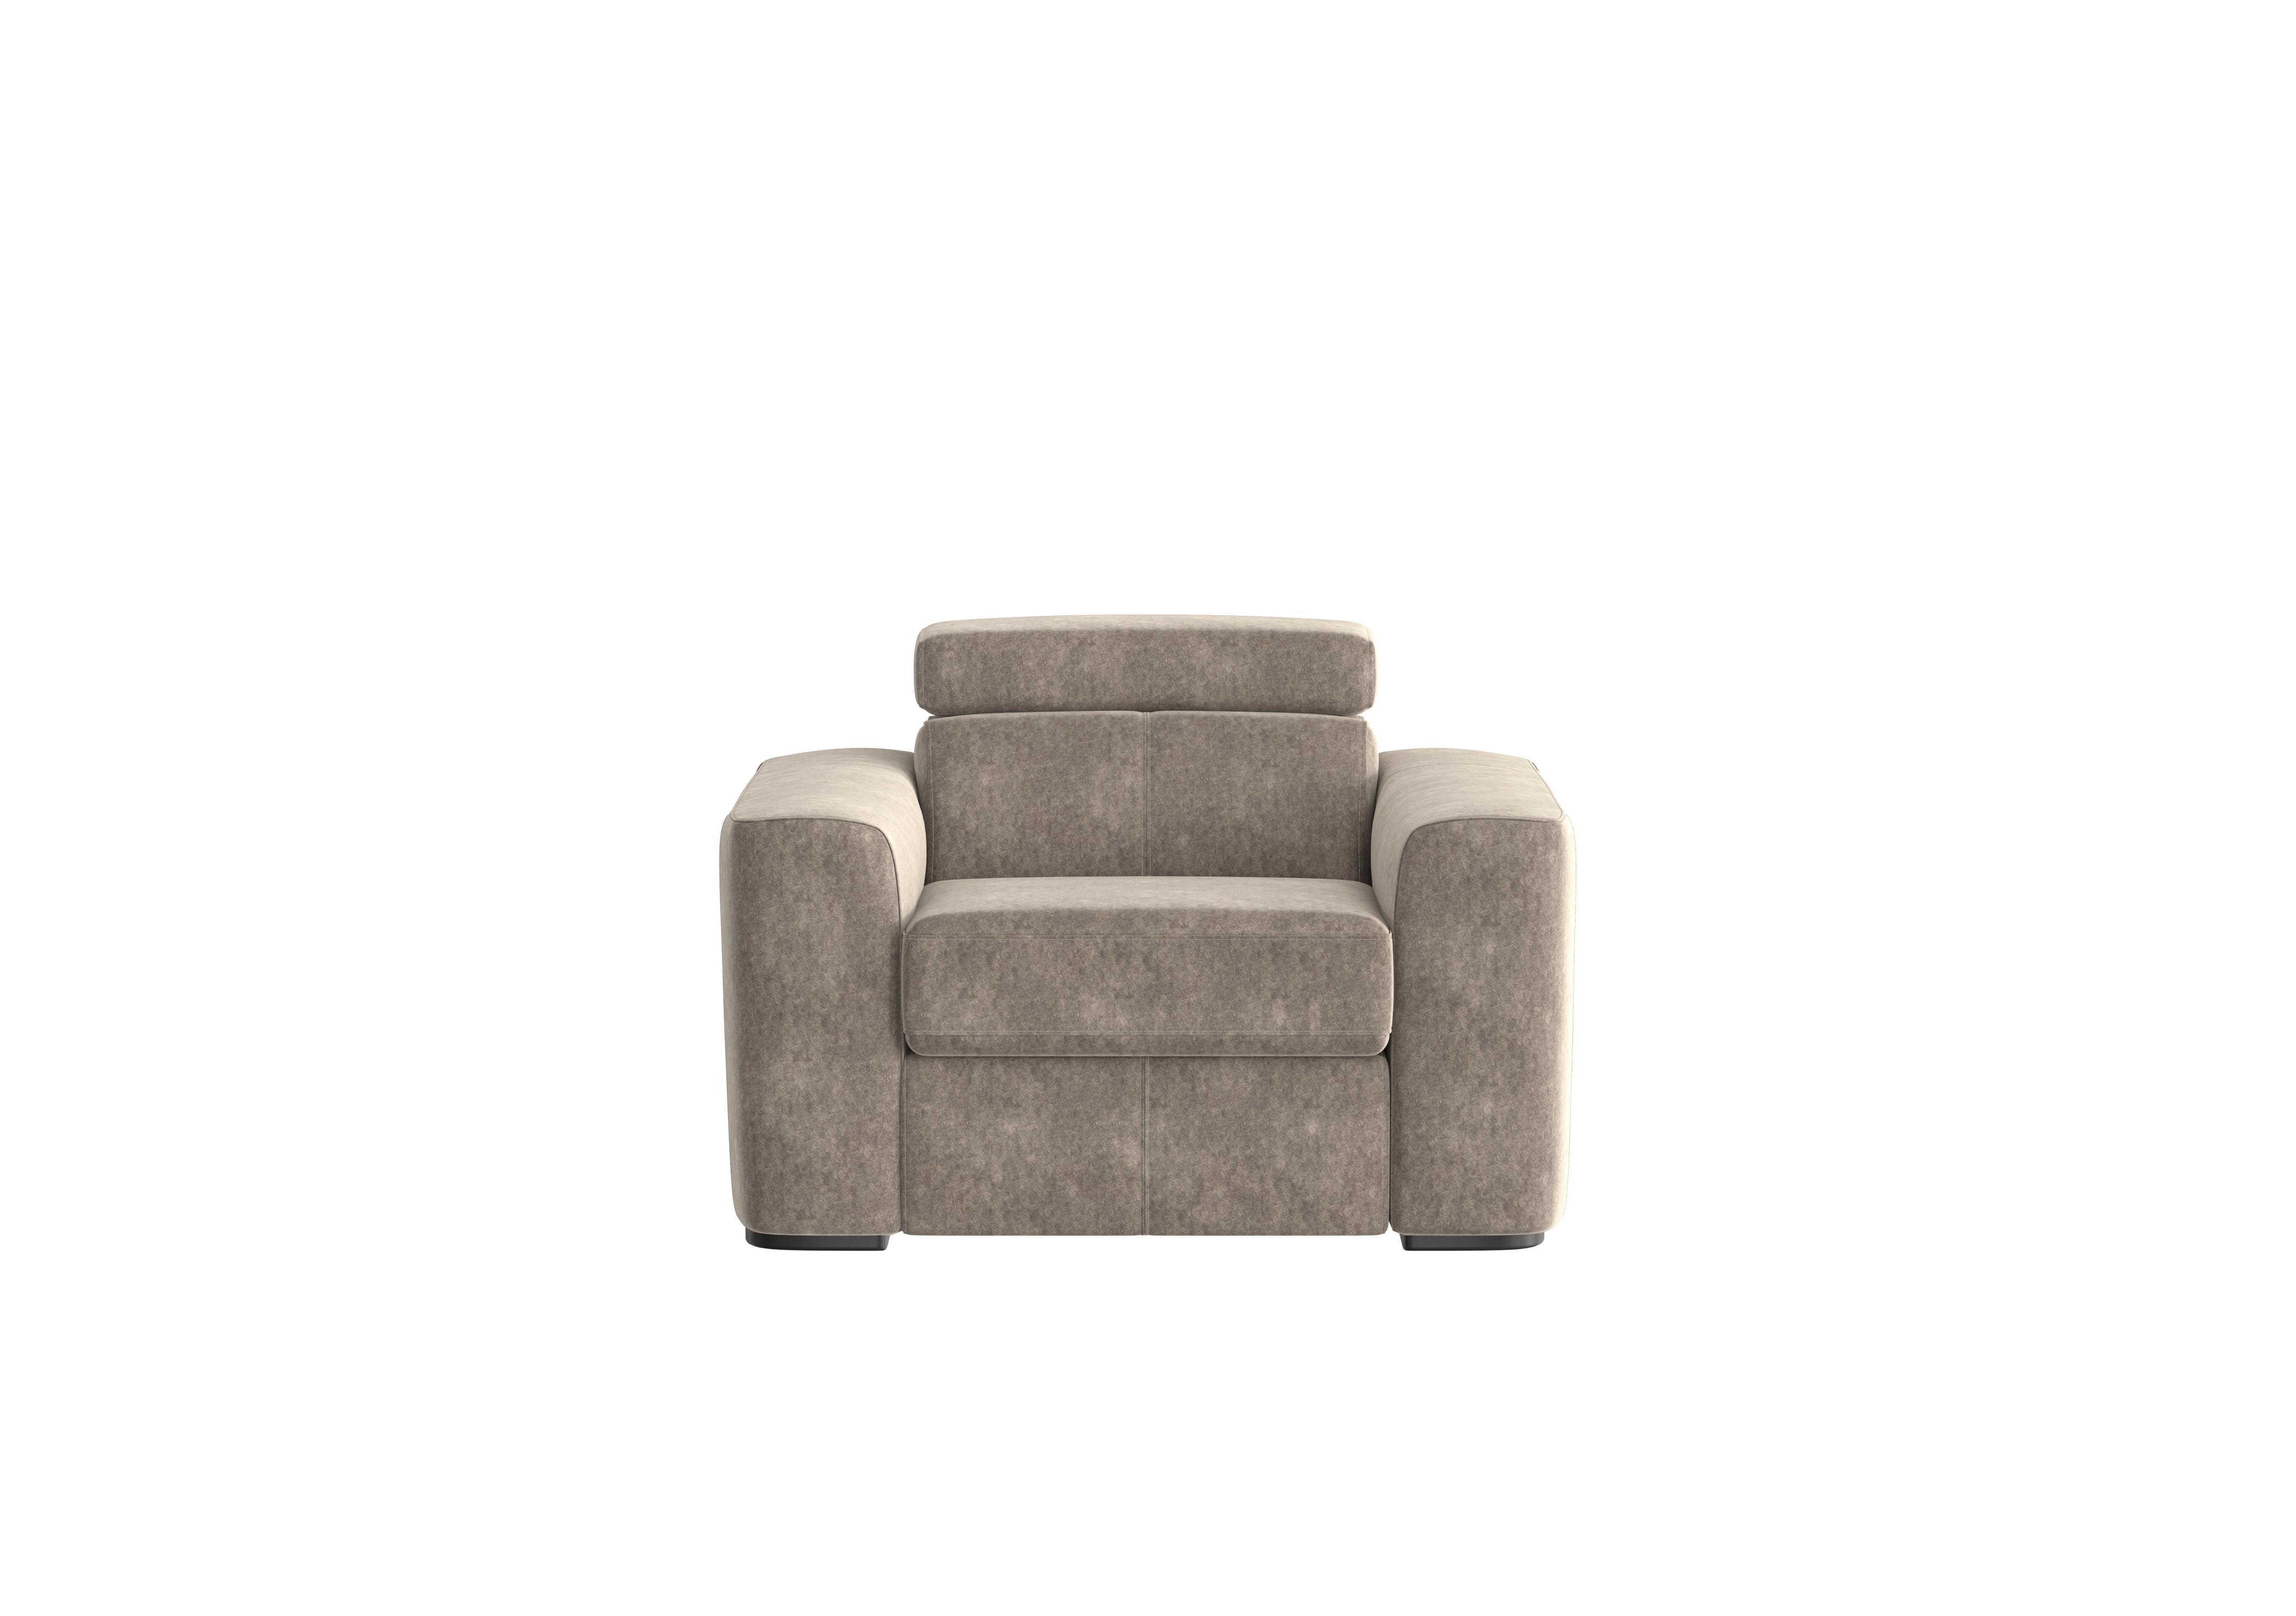 Infinity Fabric Armchair in Bfa-Bnn-R29 Fv1 Mink on Furniture Village